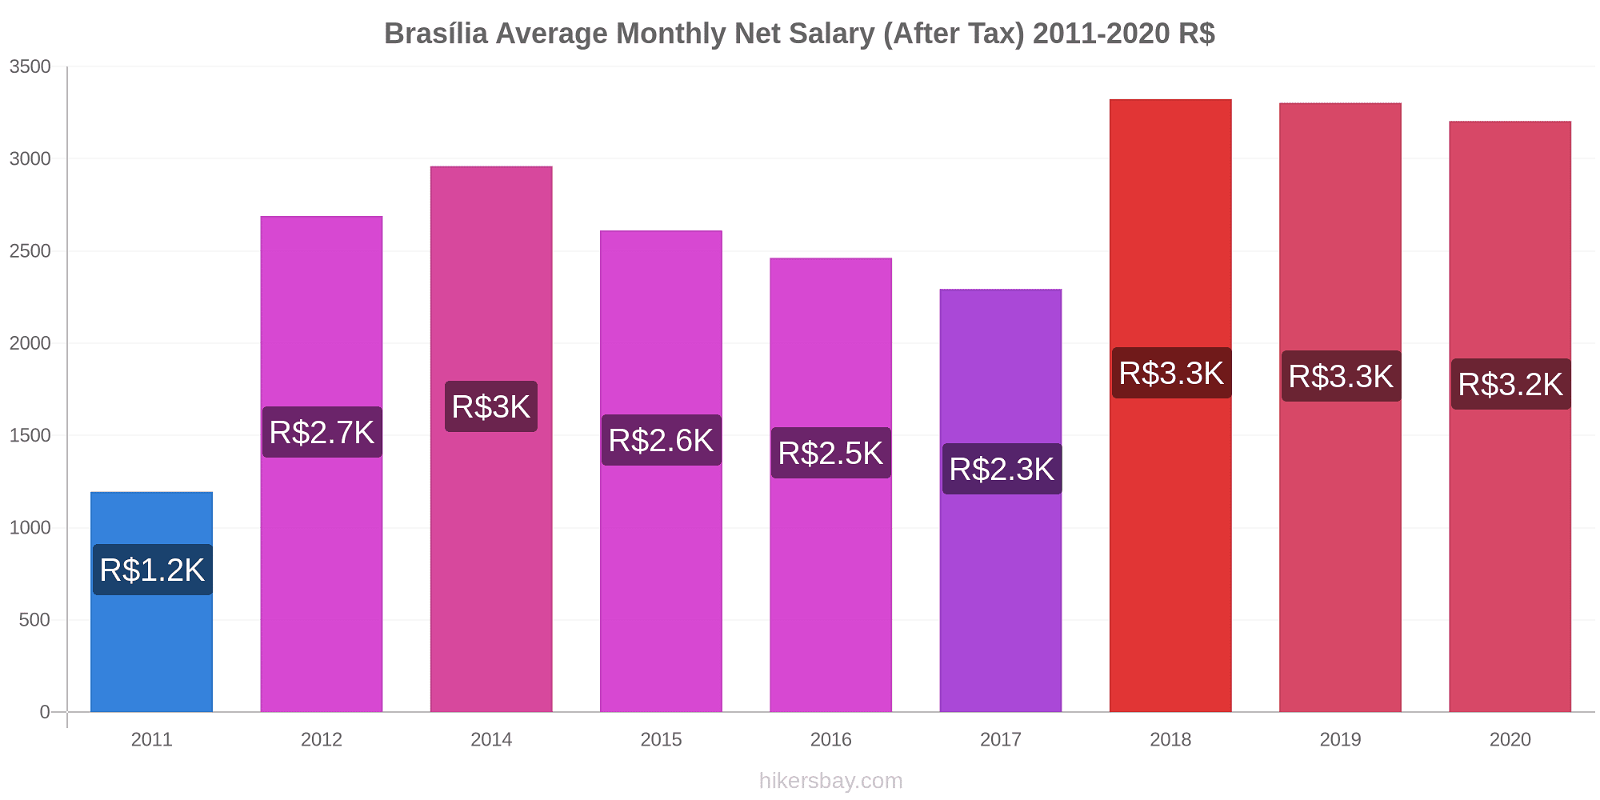 Brasília price changes Average Monthly Net Salary (After Tax) hikersbay.com